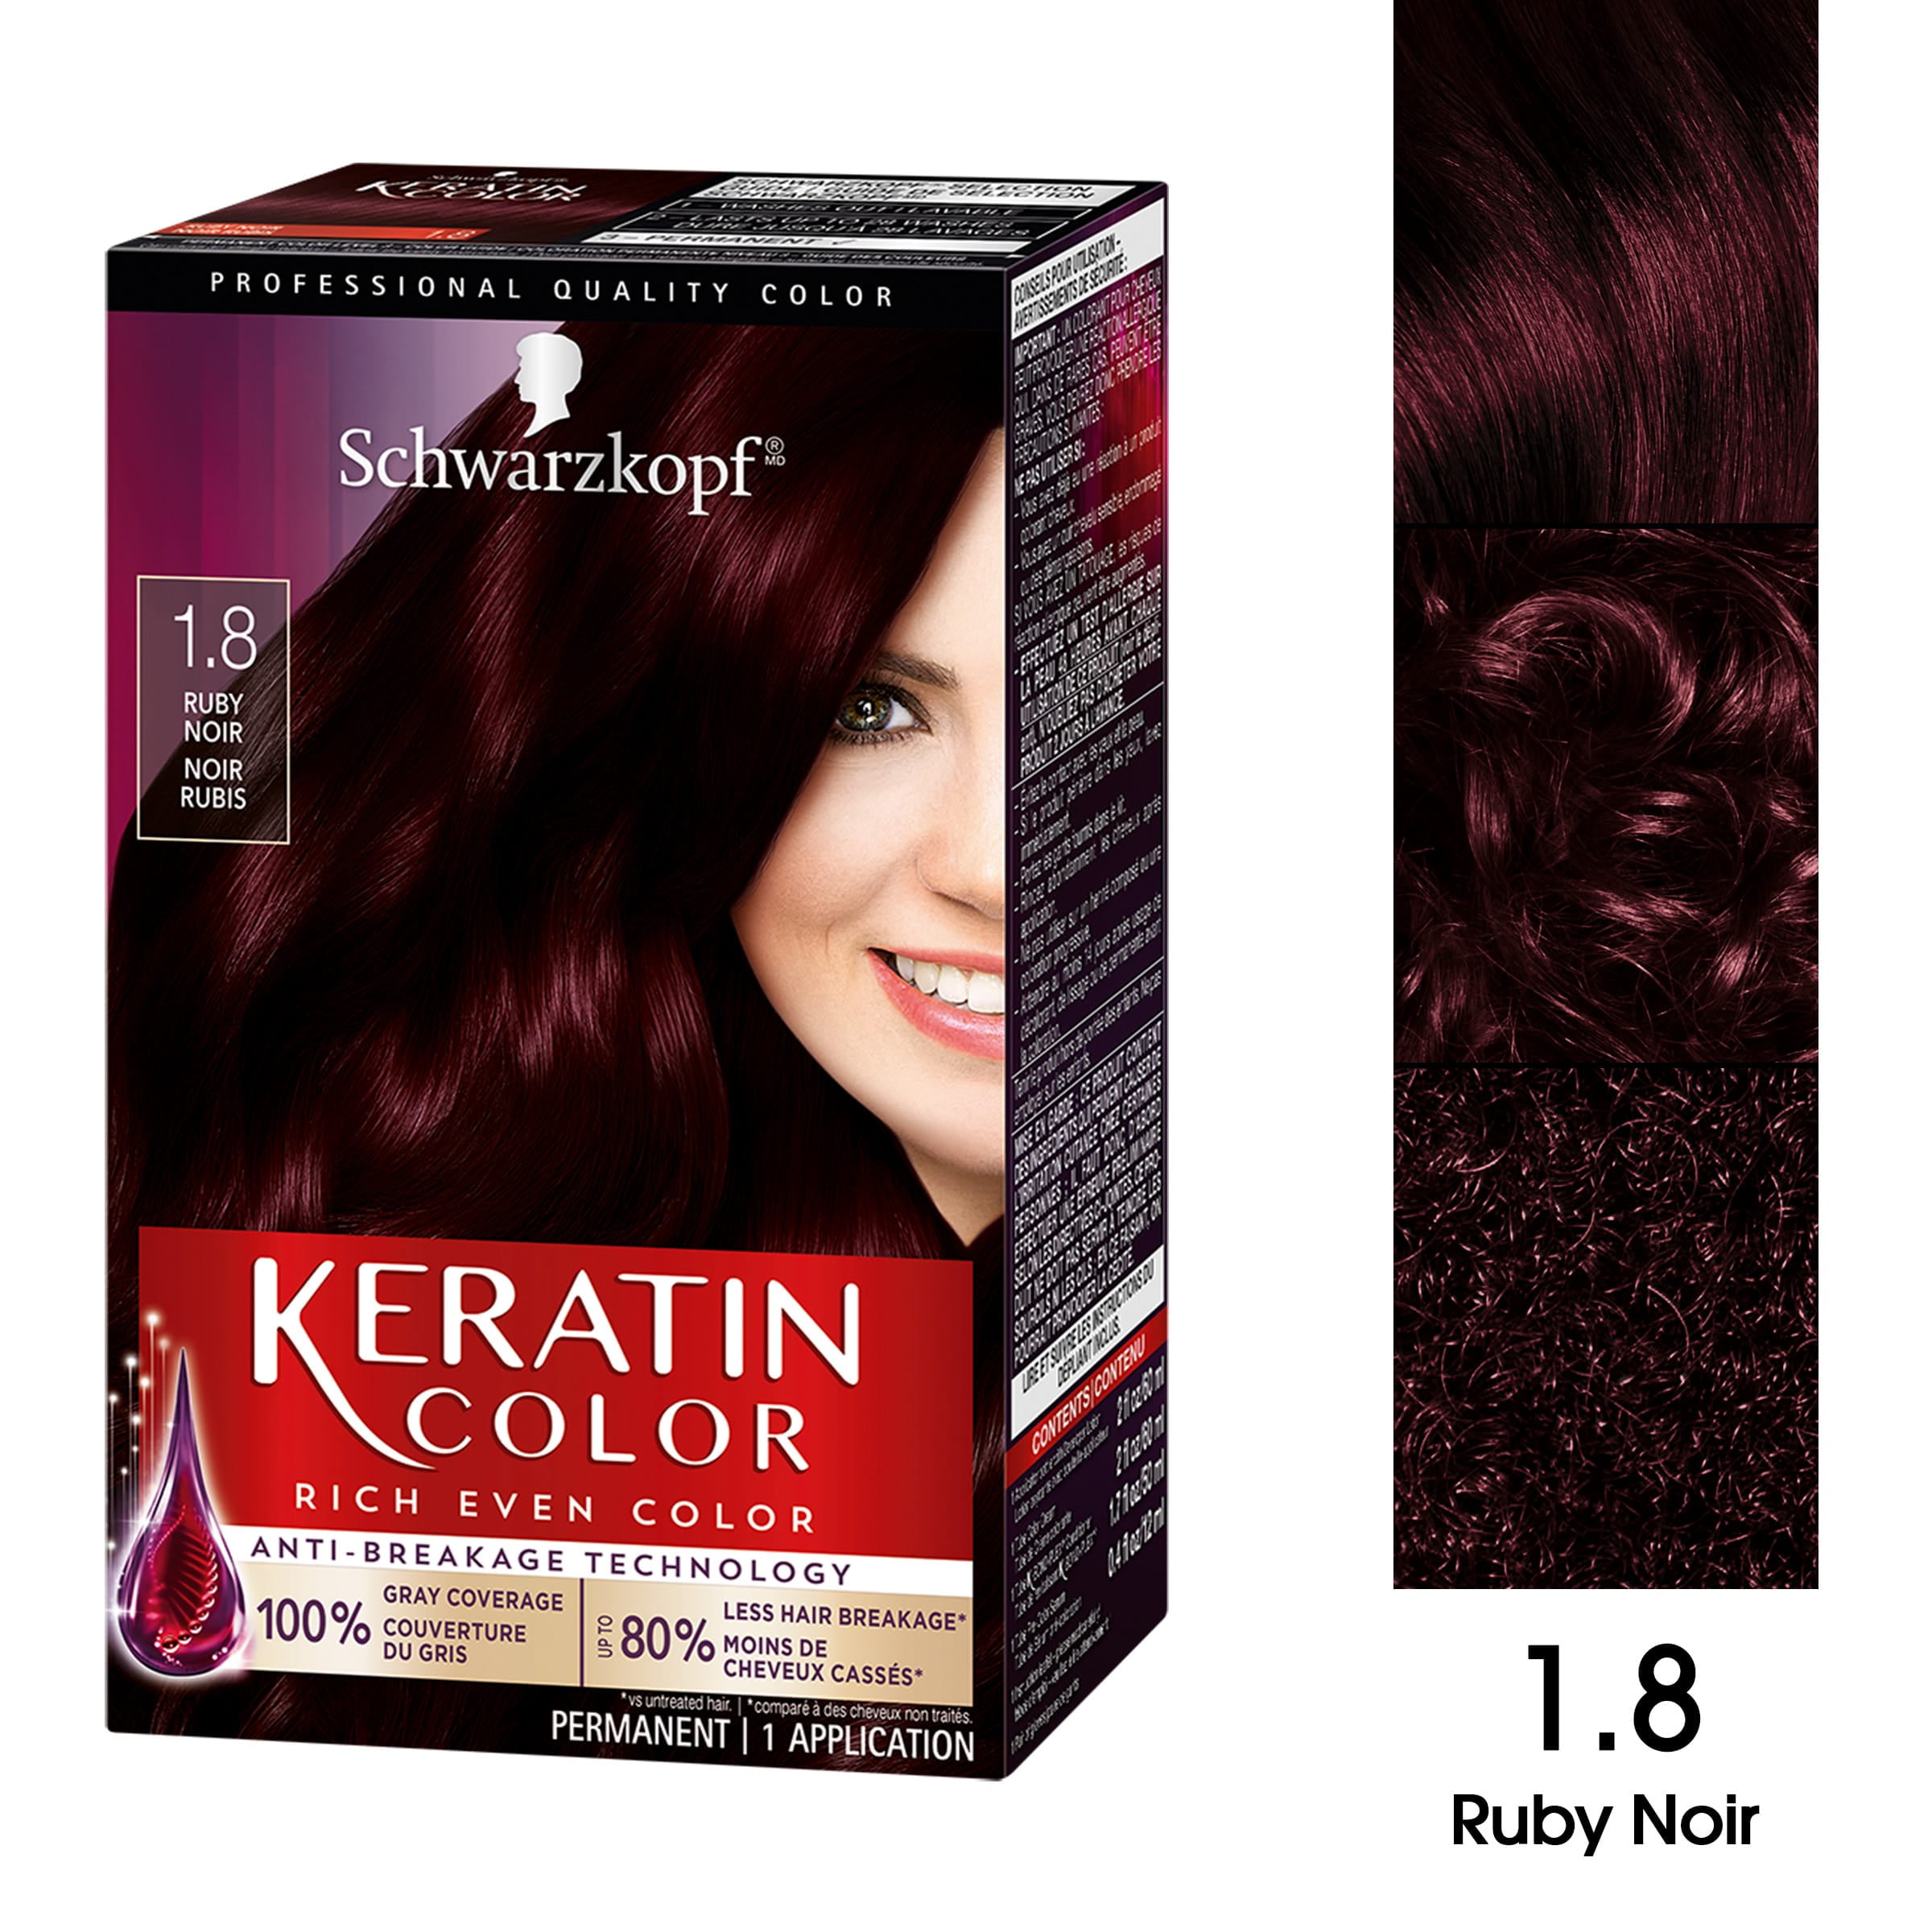 Schwarzkopf Keratin Permanent Hair Color : Target